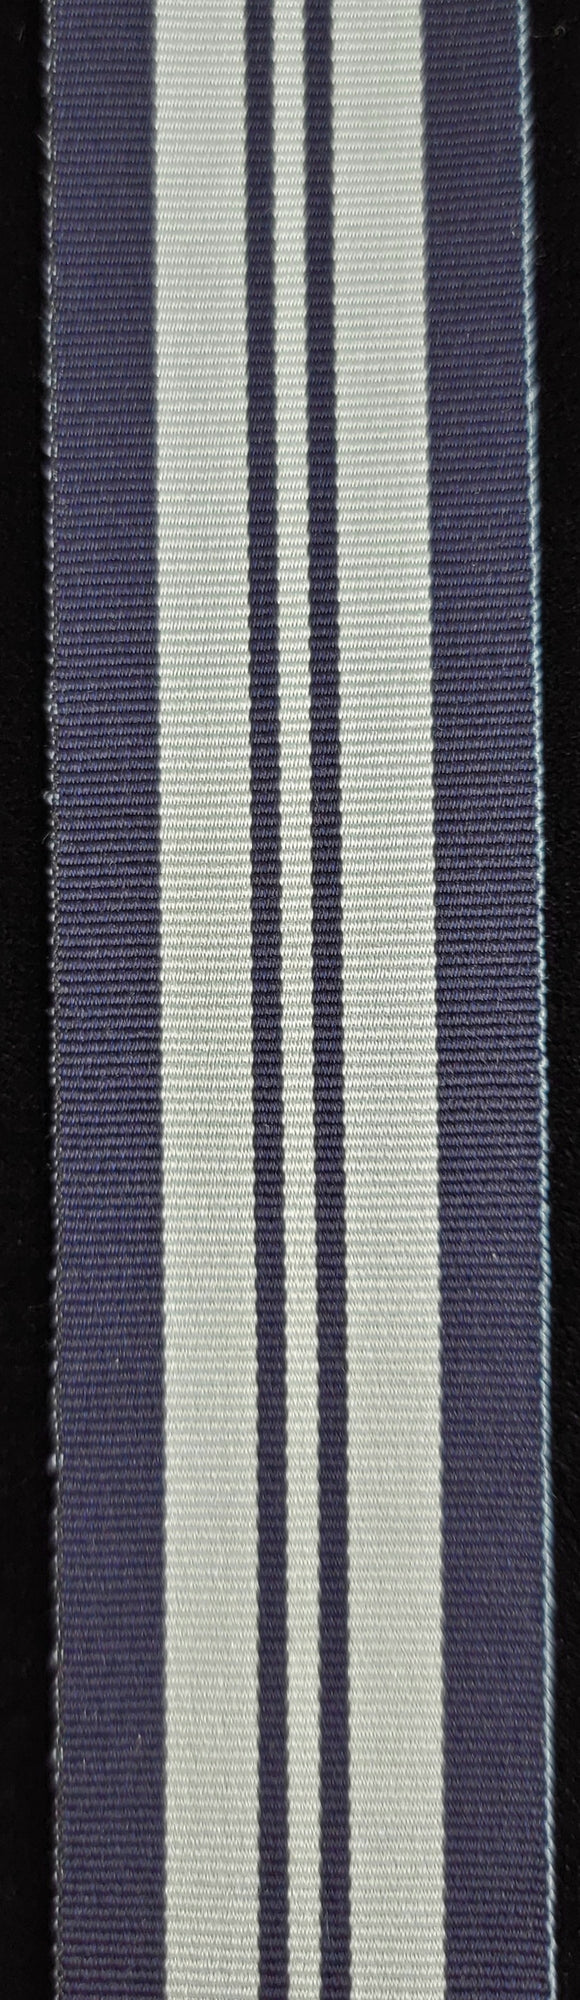 Ribbon, WW2 India War Medal